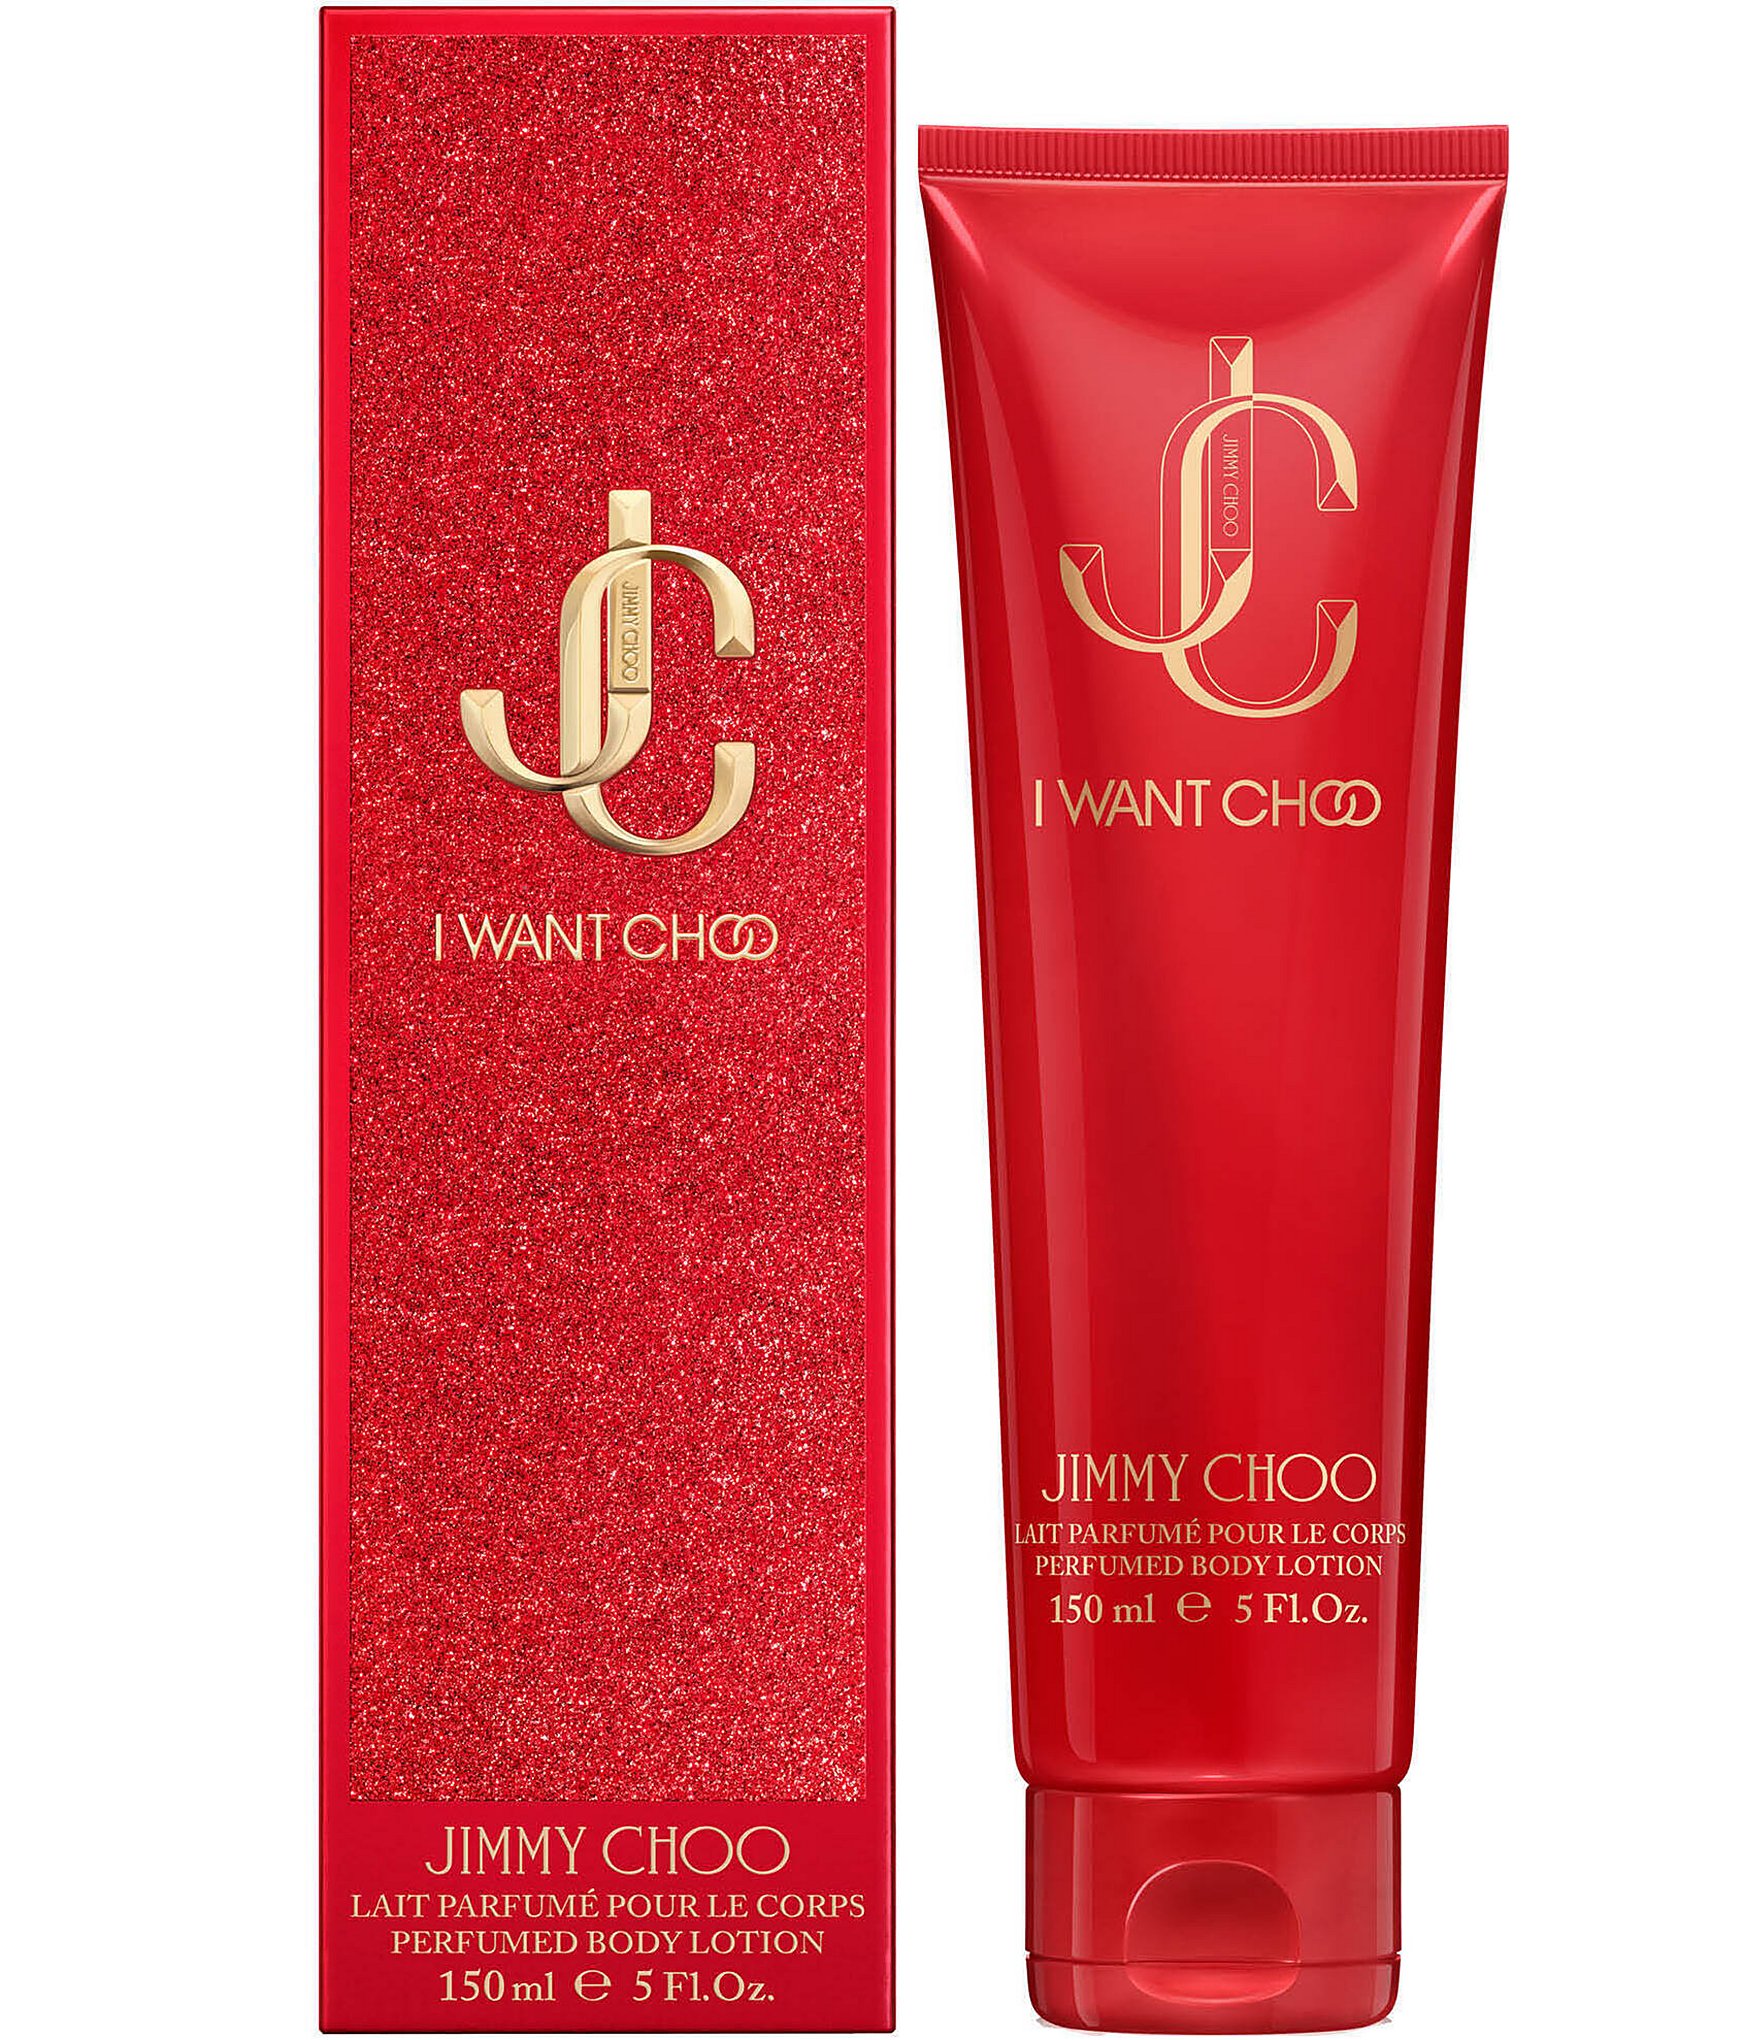 Jimmy Choo I Want Choo Perfume Body Lotion | Dillard's